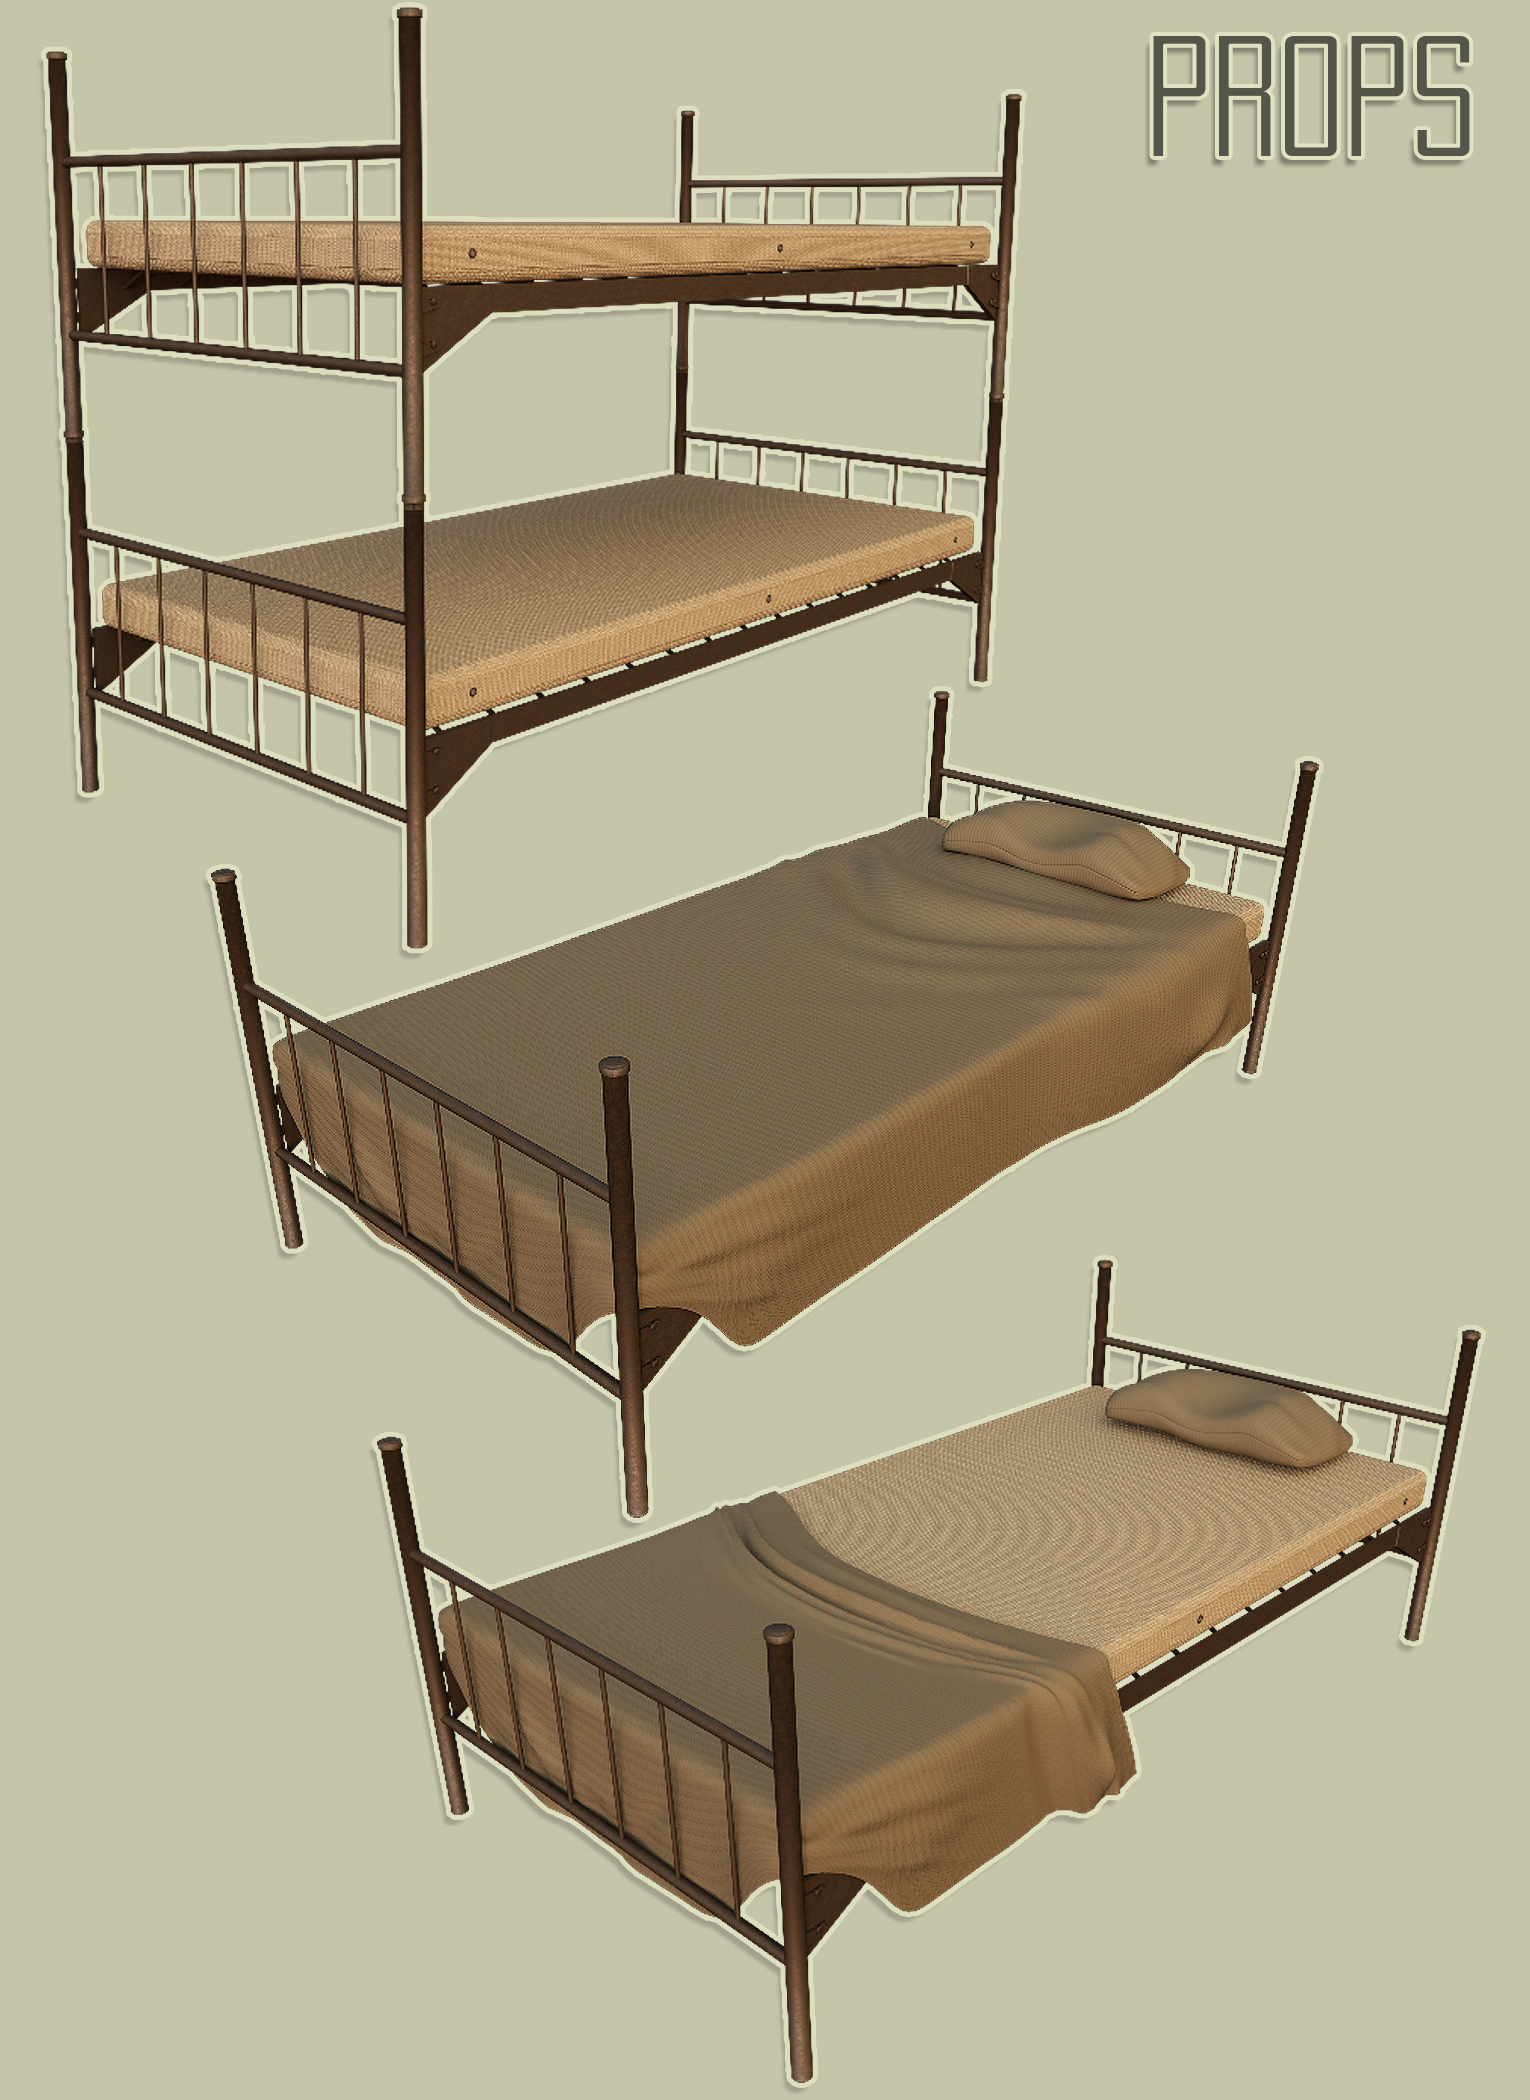 Sleep Away Camp by: The AntFarm, 3D Models by Daz 3D